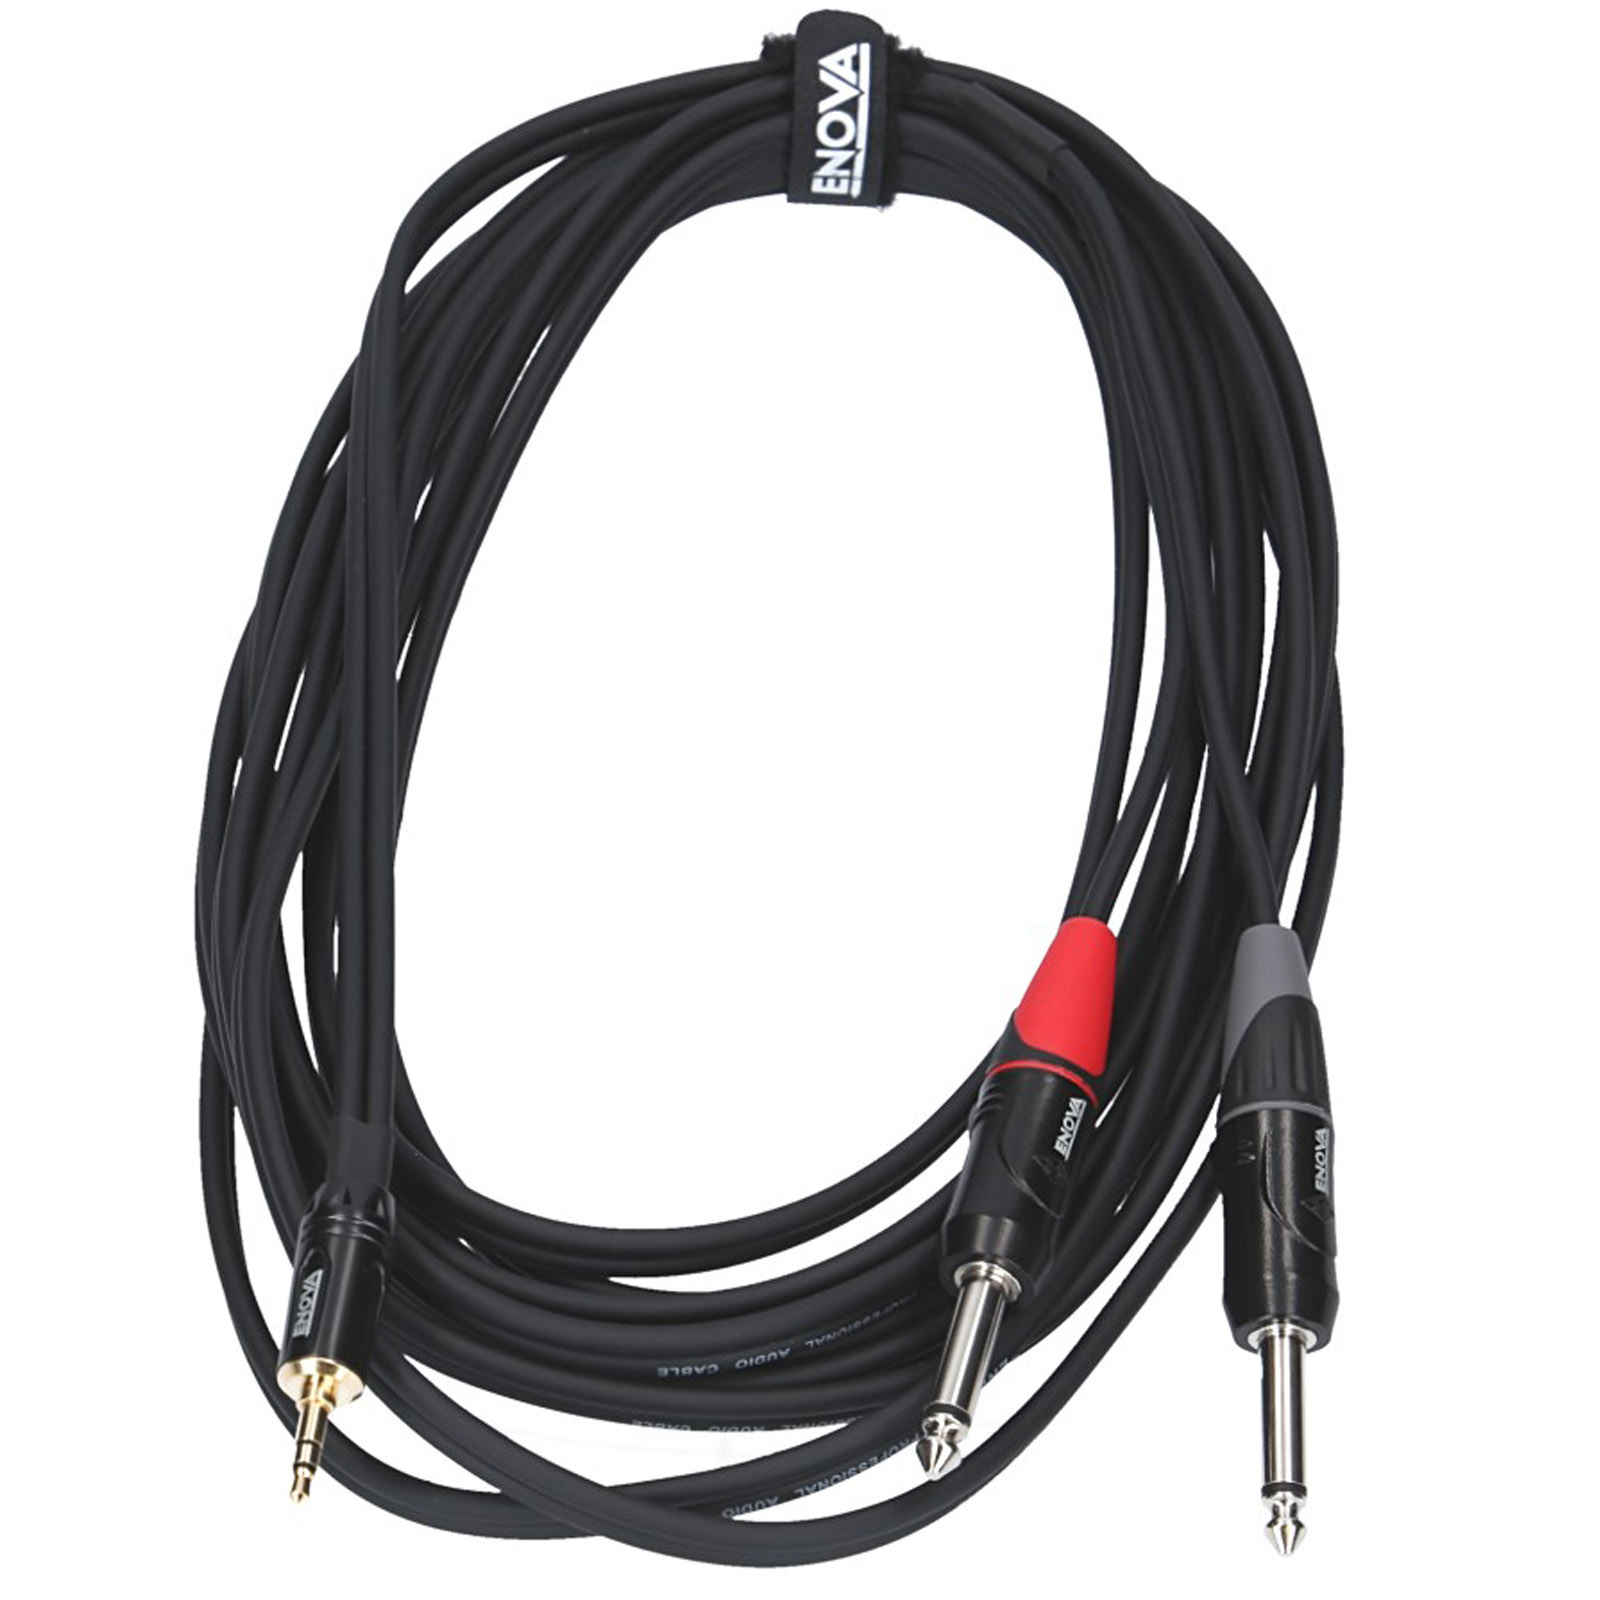 schwarz 3.5 Adapter mm Stereokabel, x 1 m m pol & pol mm 2 6.35 Miniklinke Adapterkabel 2 ENOVA - 1 Klinken Kabel, 3 rot Audio